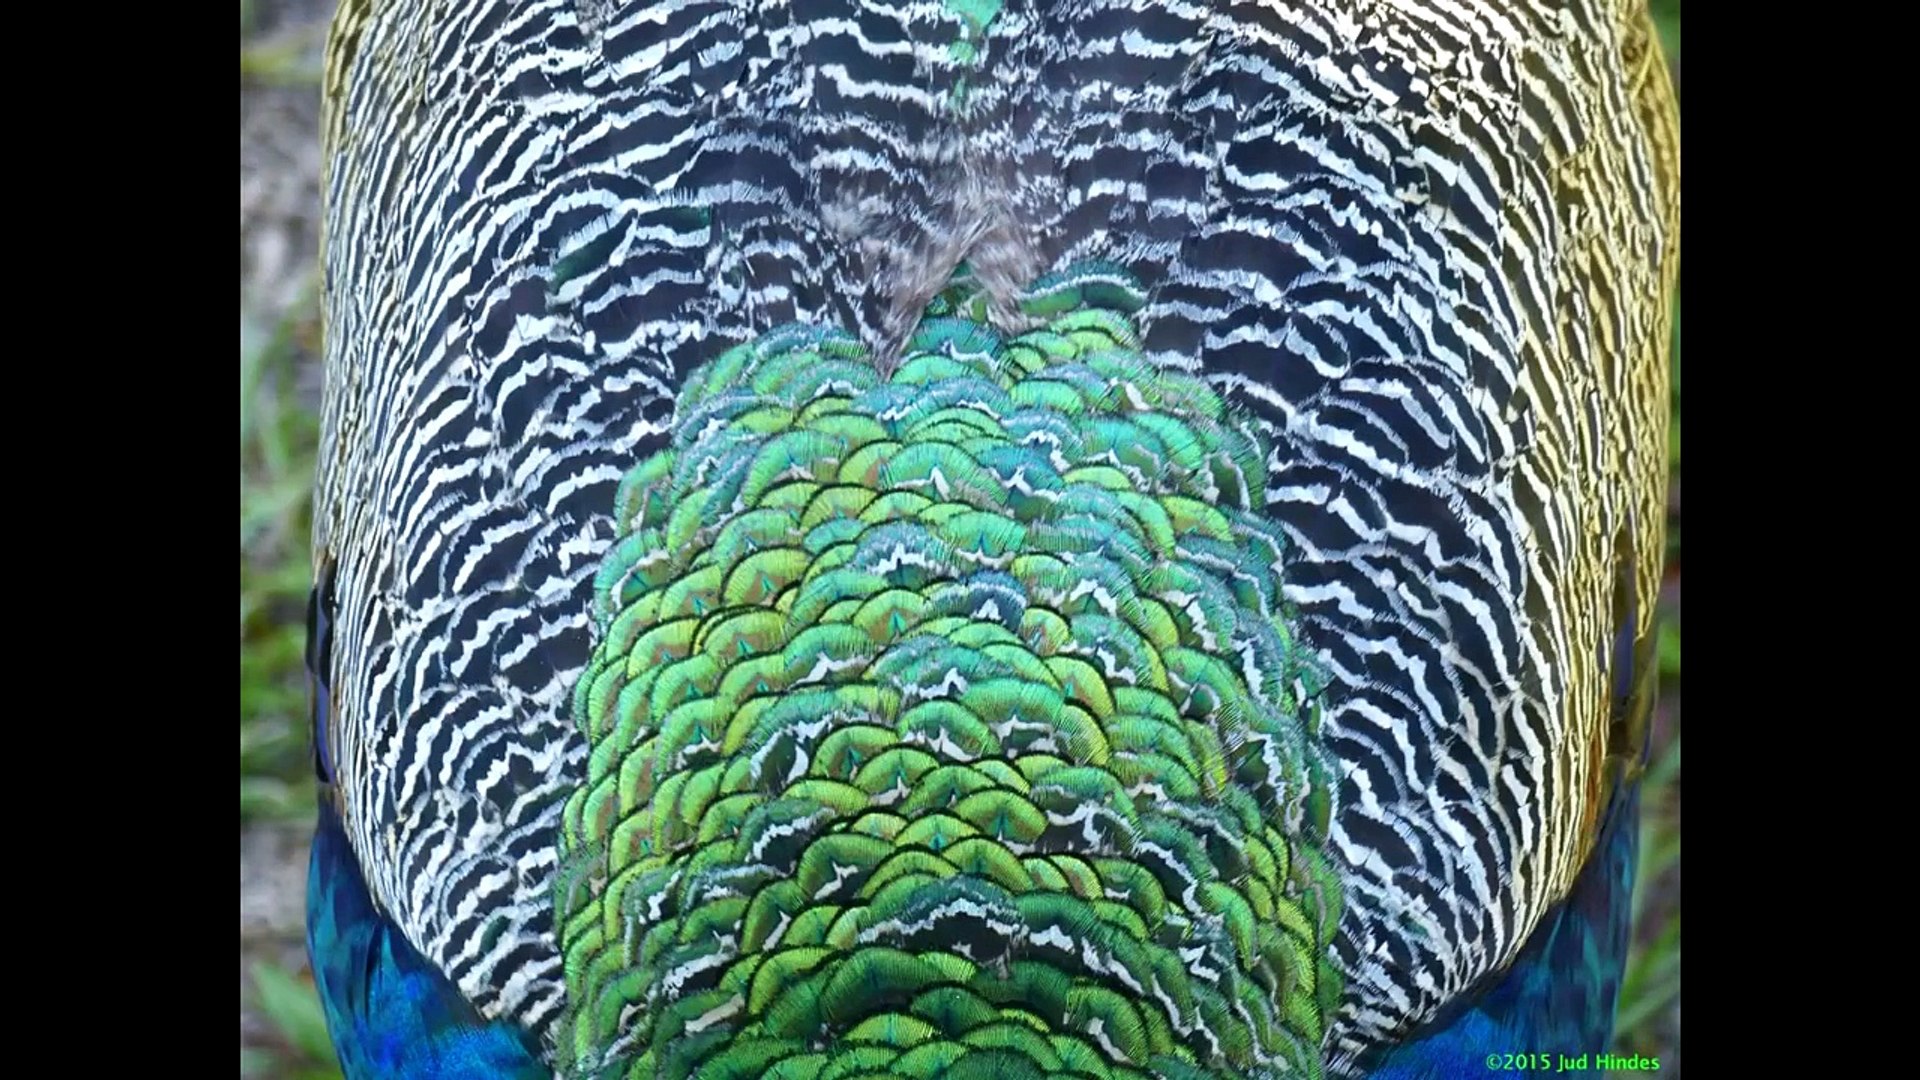 Peacock in the Yard